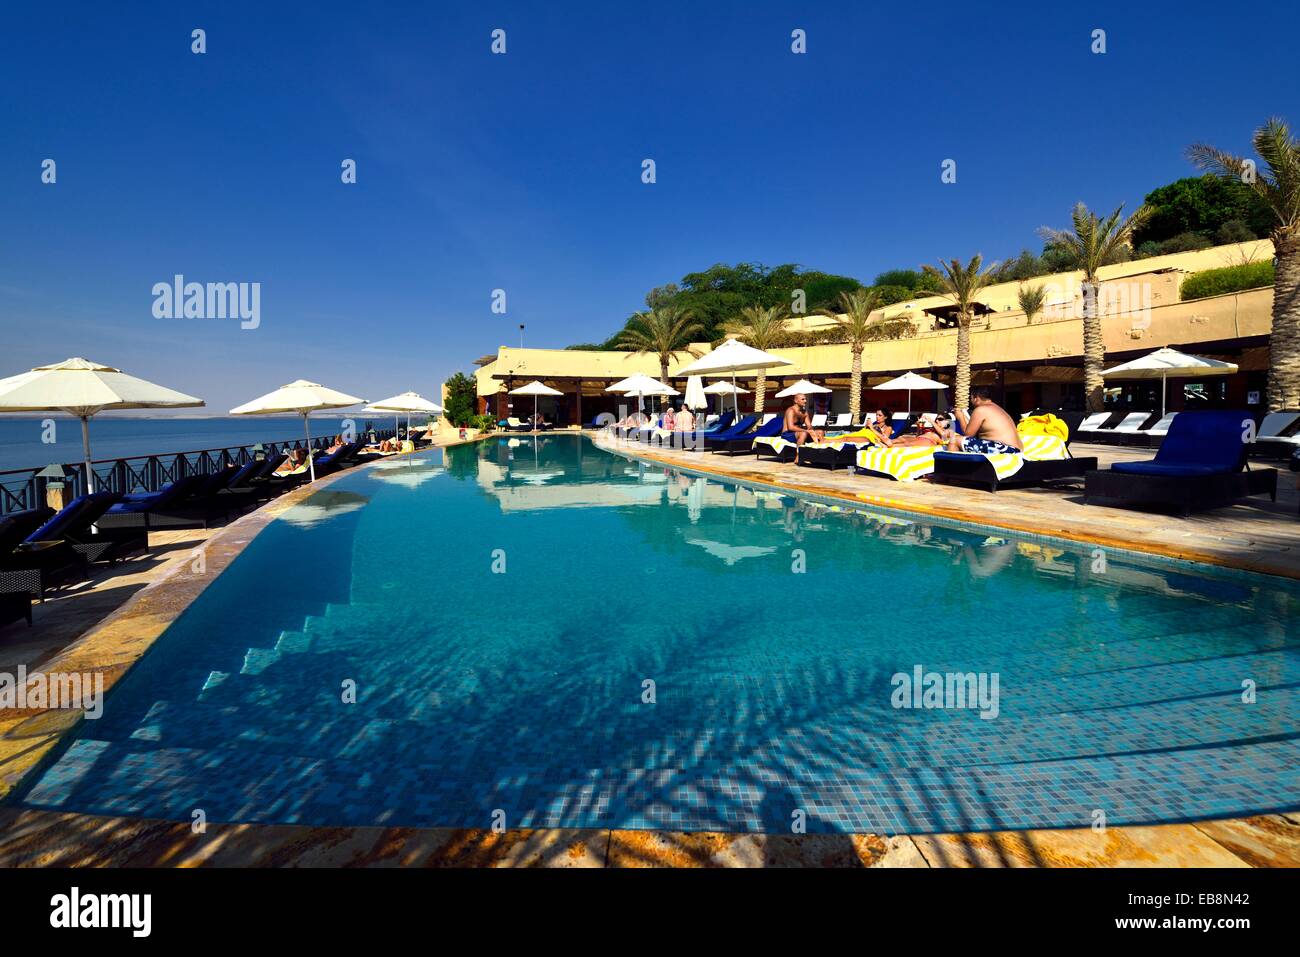 Das Mövenpick Resort Totes Meer, Jordanien Stockfotografie - Alamy